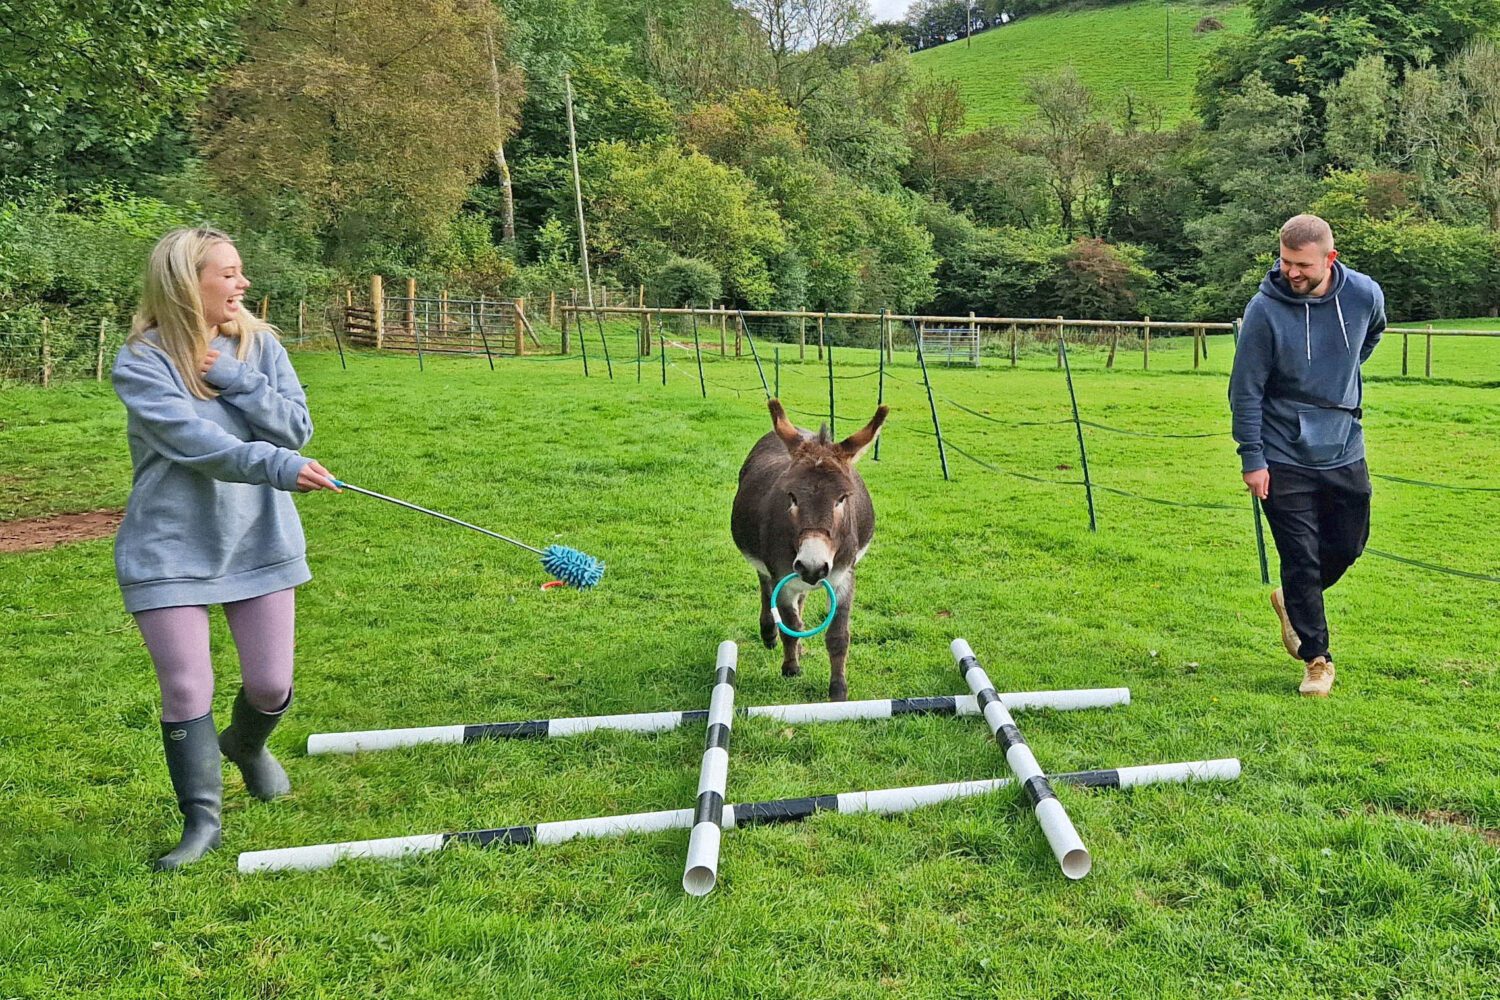 mini donkey agility games in wales